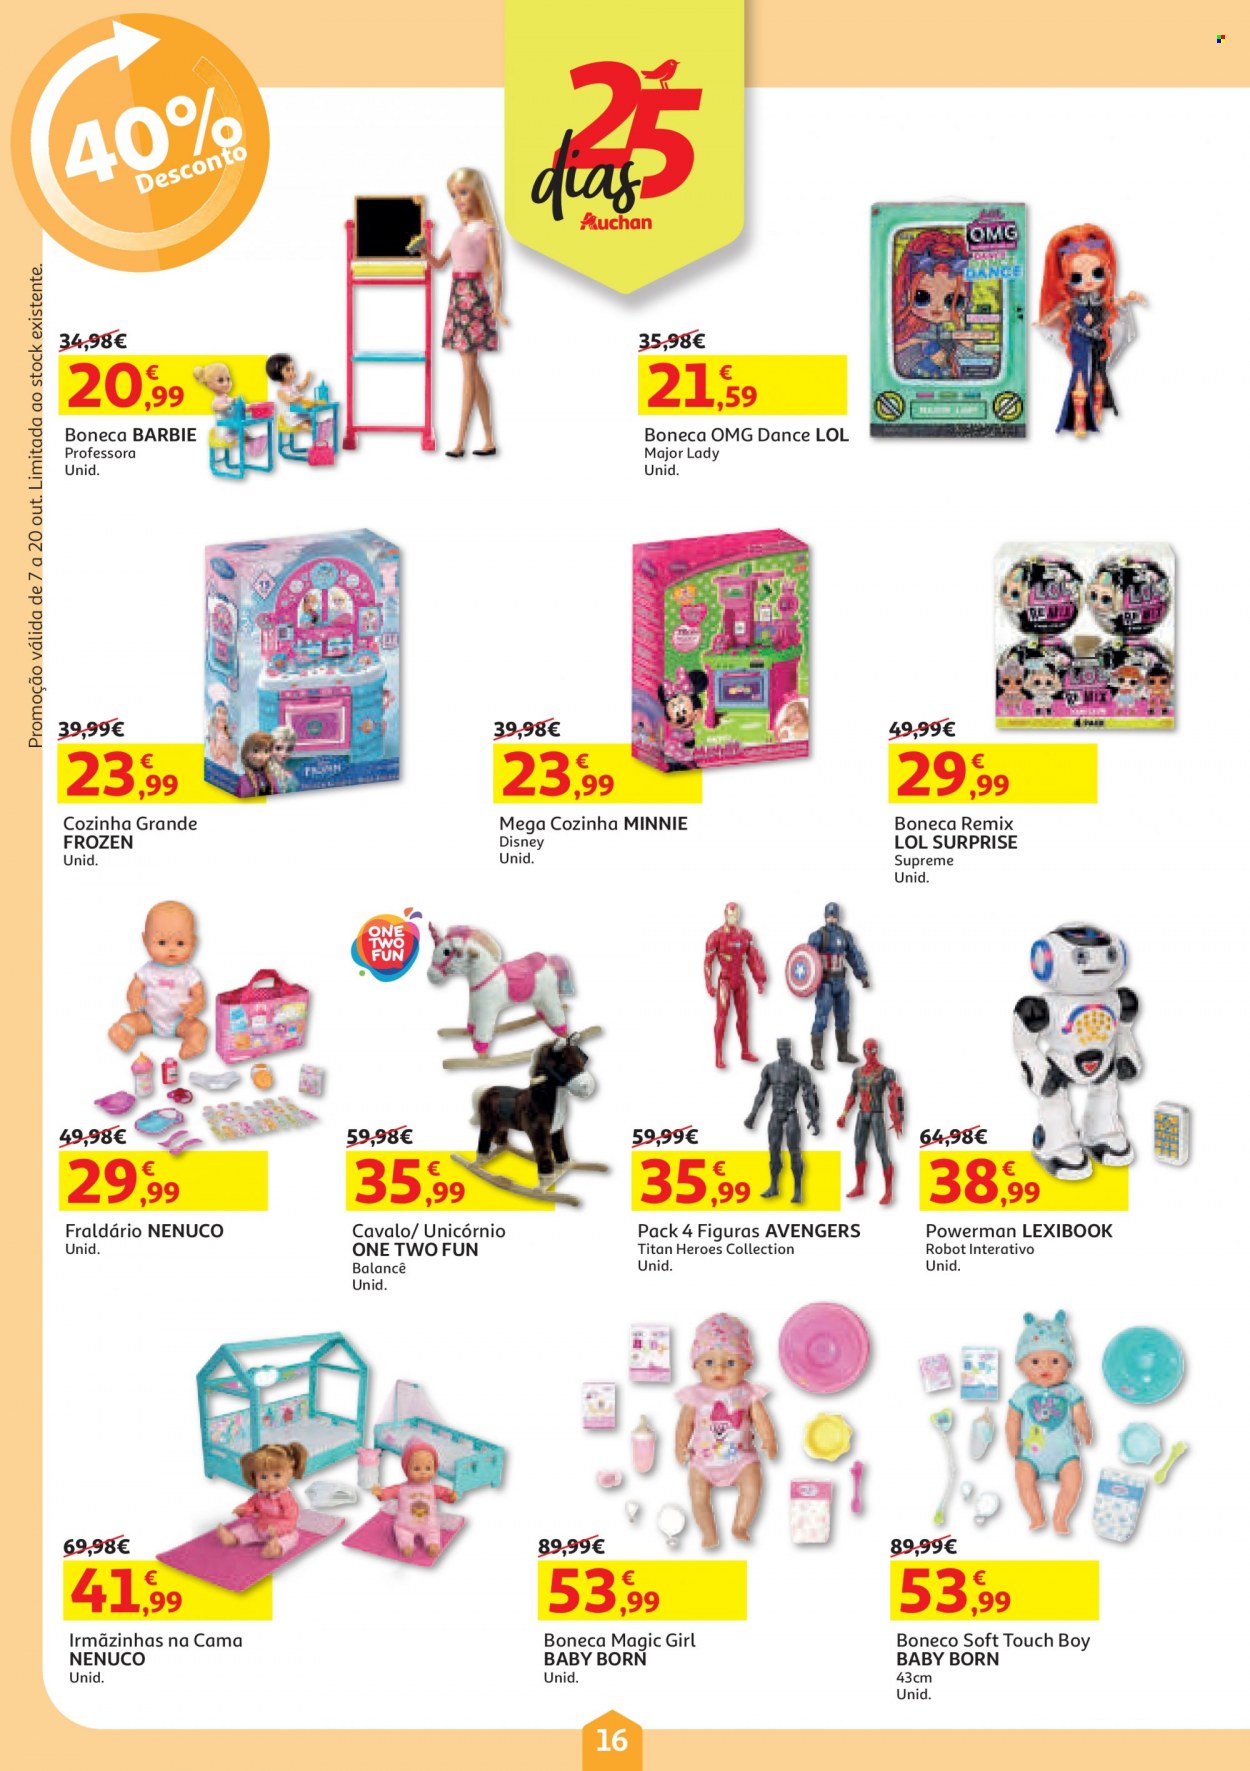 thumbnail - Folheto Auchan - 7.10.2021 - 20.10.2021 - Produtos em promoção - Avengers, Frozen, Disney, Minnie, unicórnio, Barbie, Baby Born, boneca, Lexibook. Página 16.